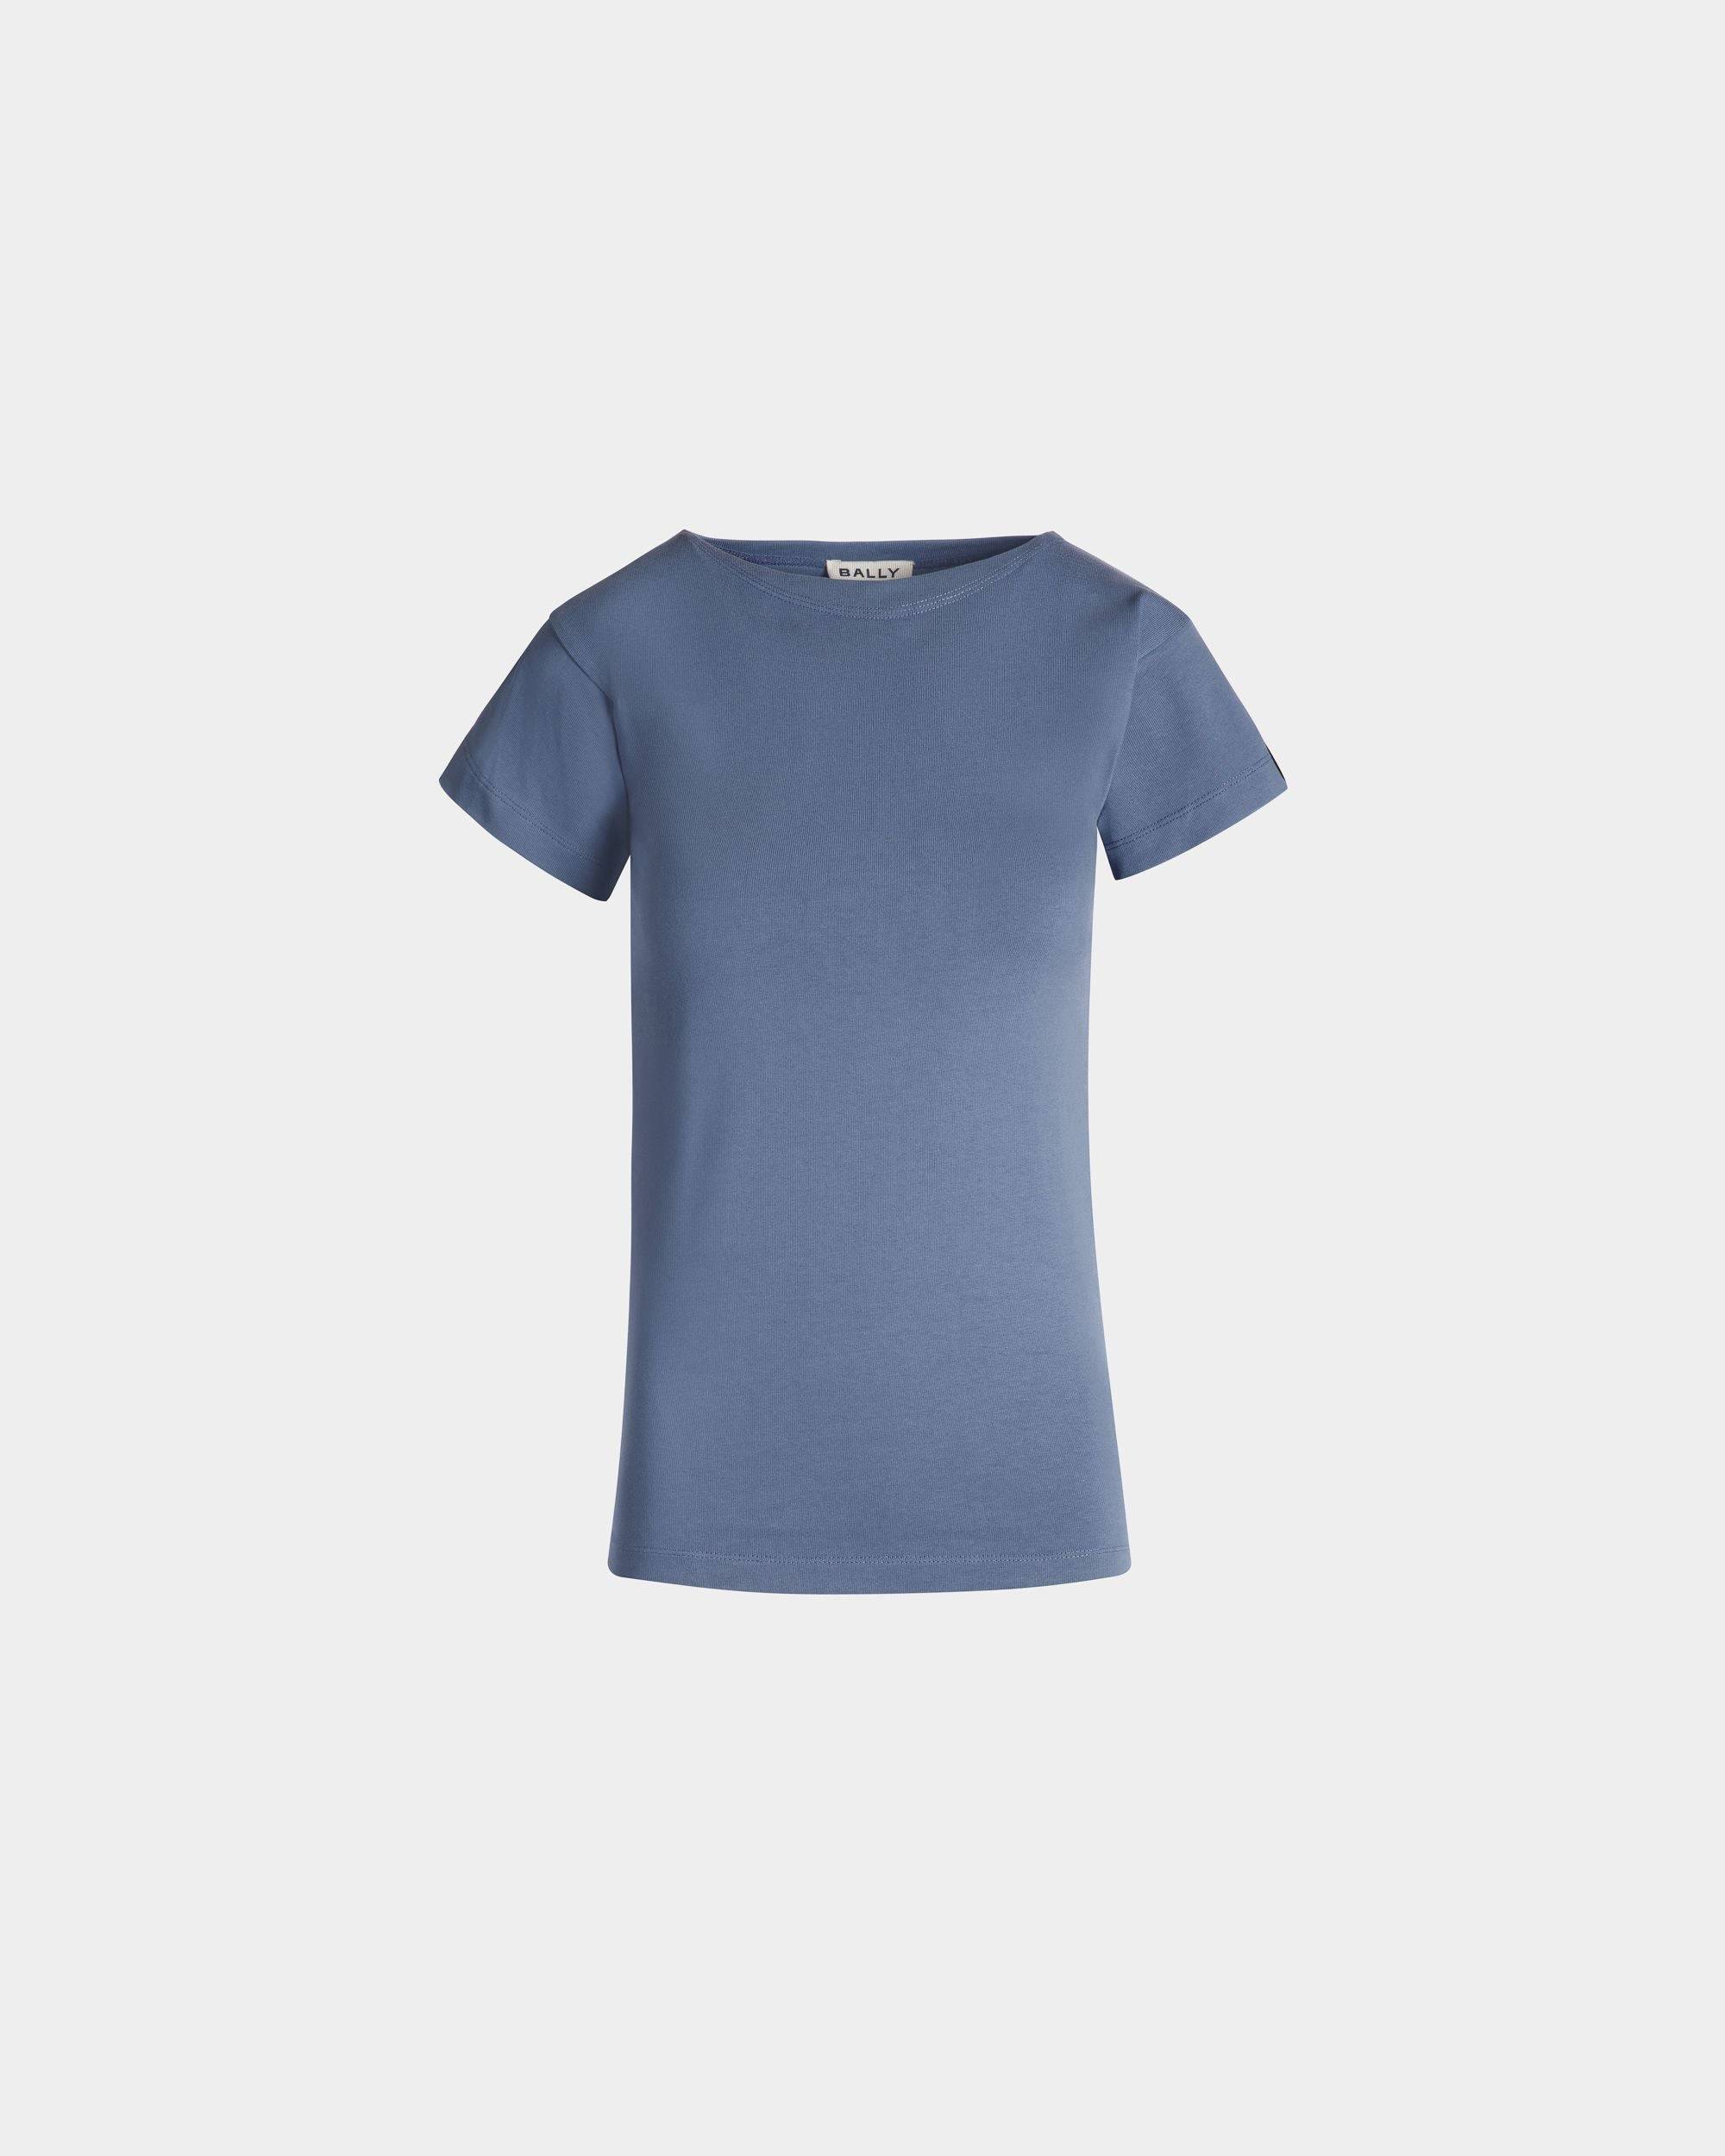 Women's Sartorial Shirts, Tops, Blouses and T-Shirts